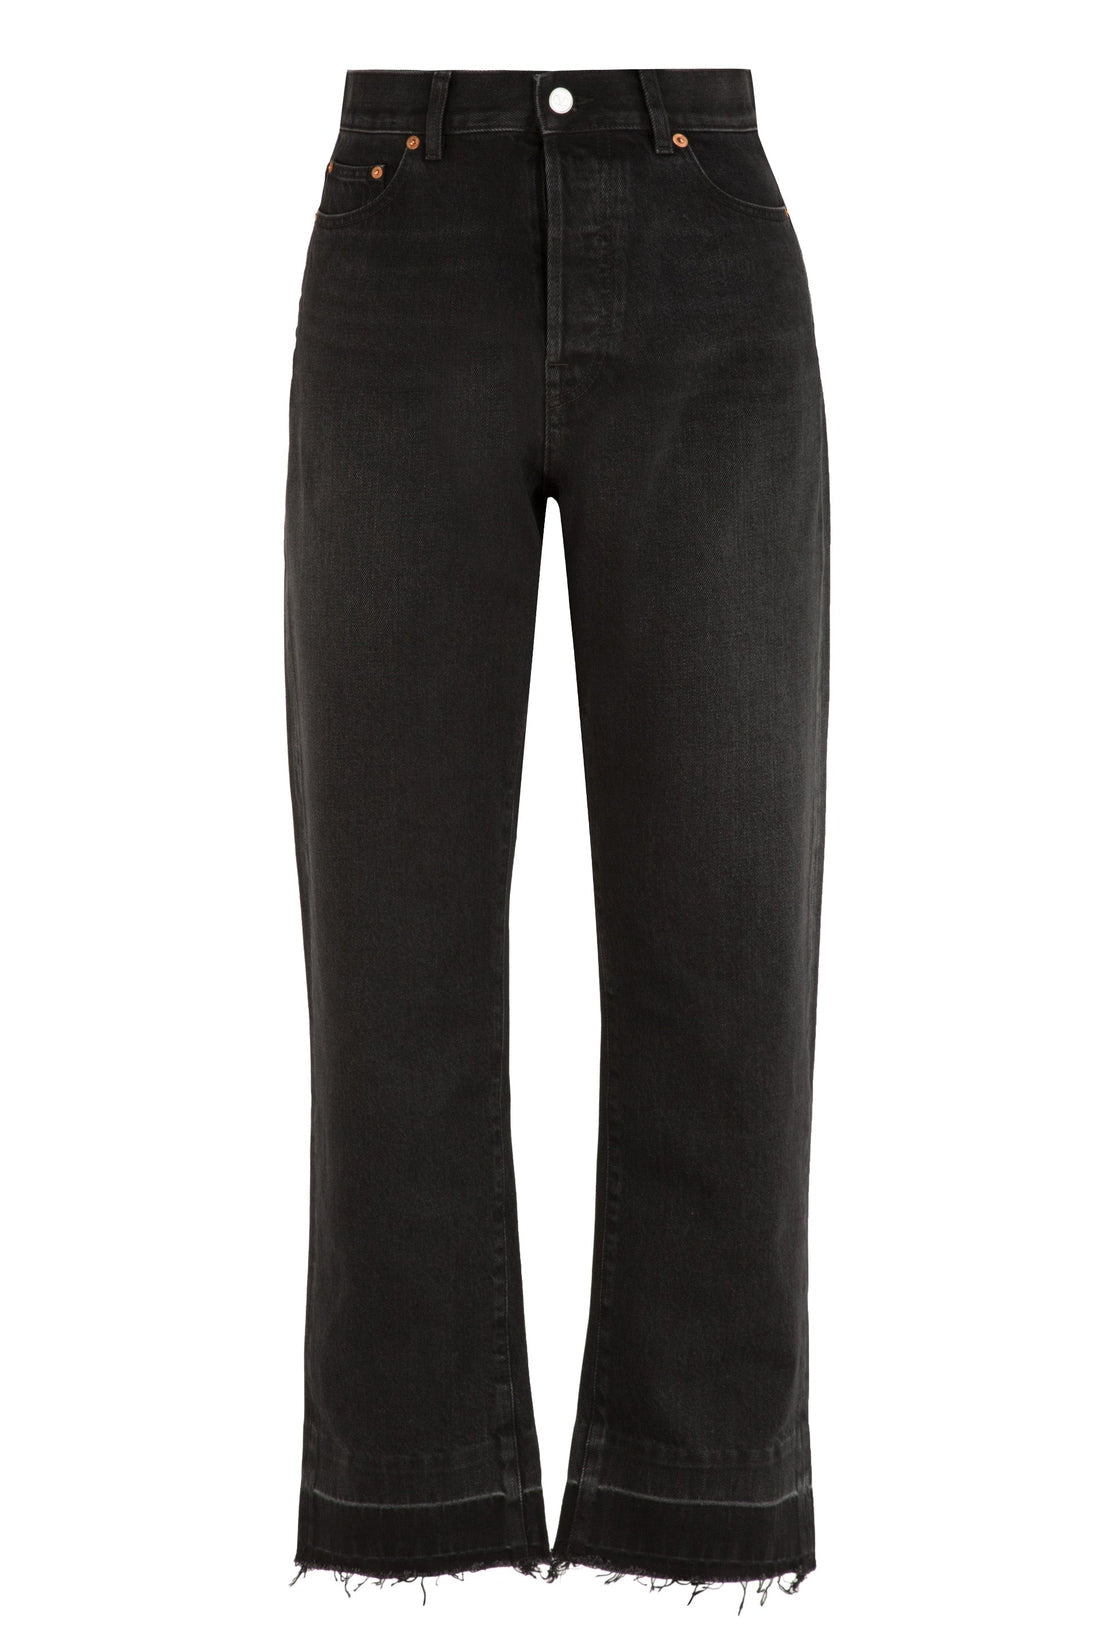 Valentino-OUTLET-SALE-Straight leg jeans-ARCHIVIST